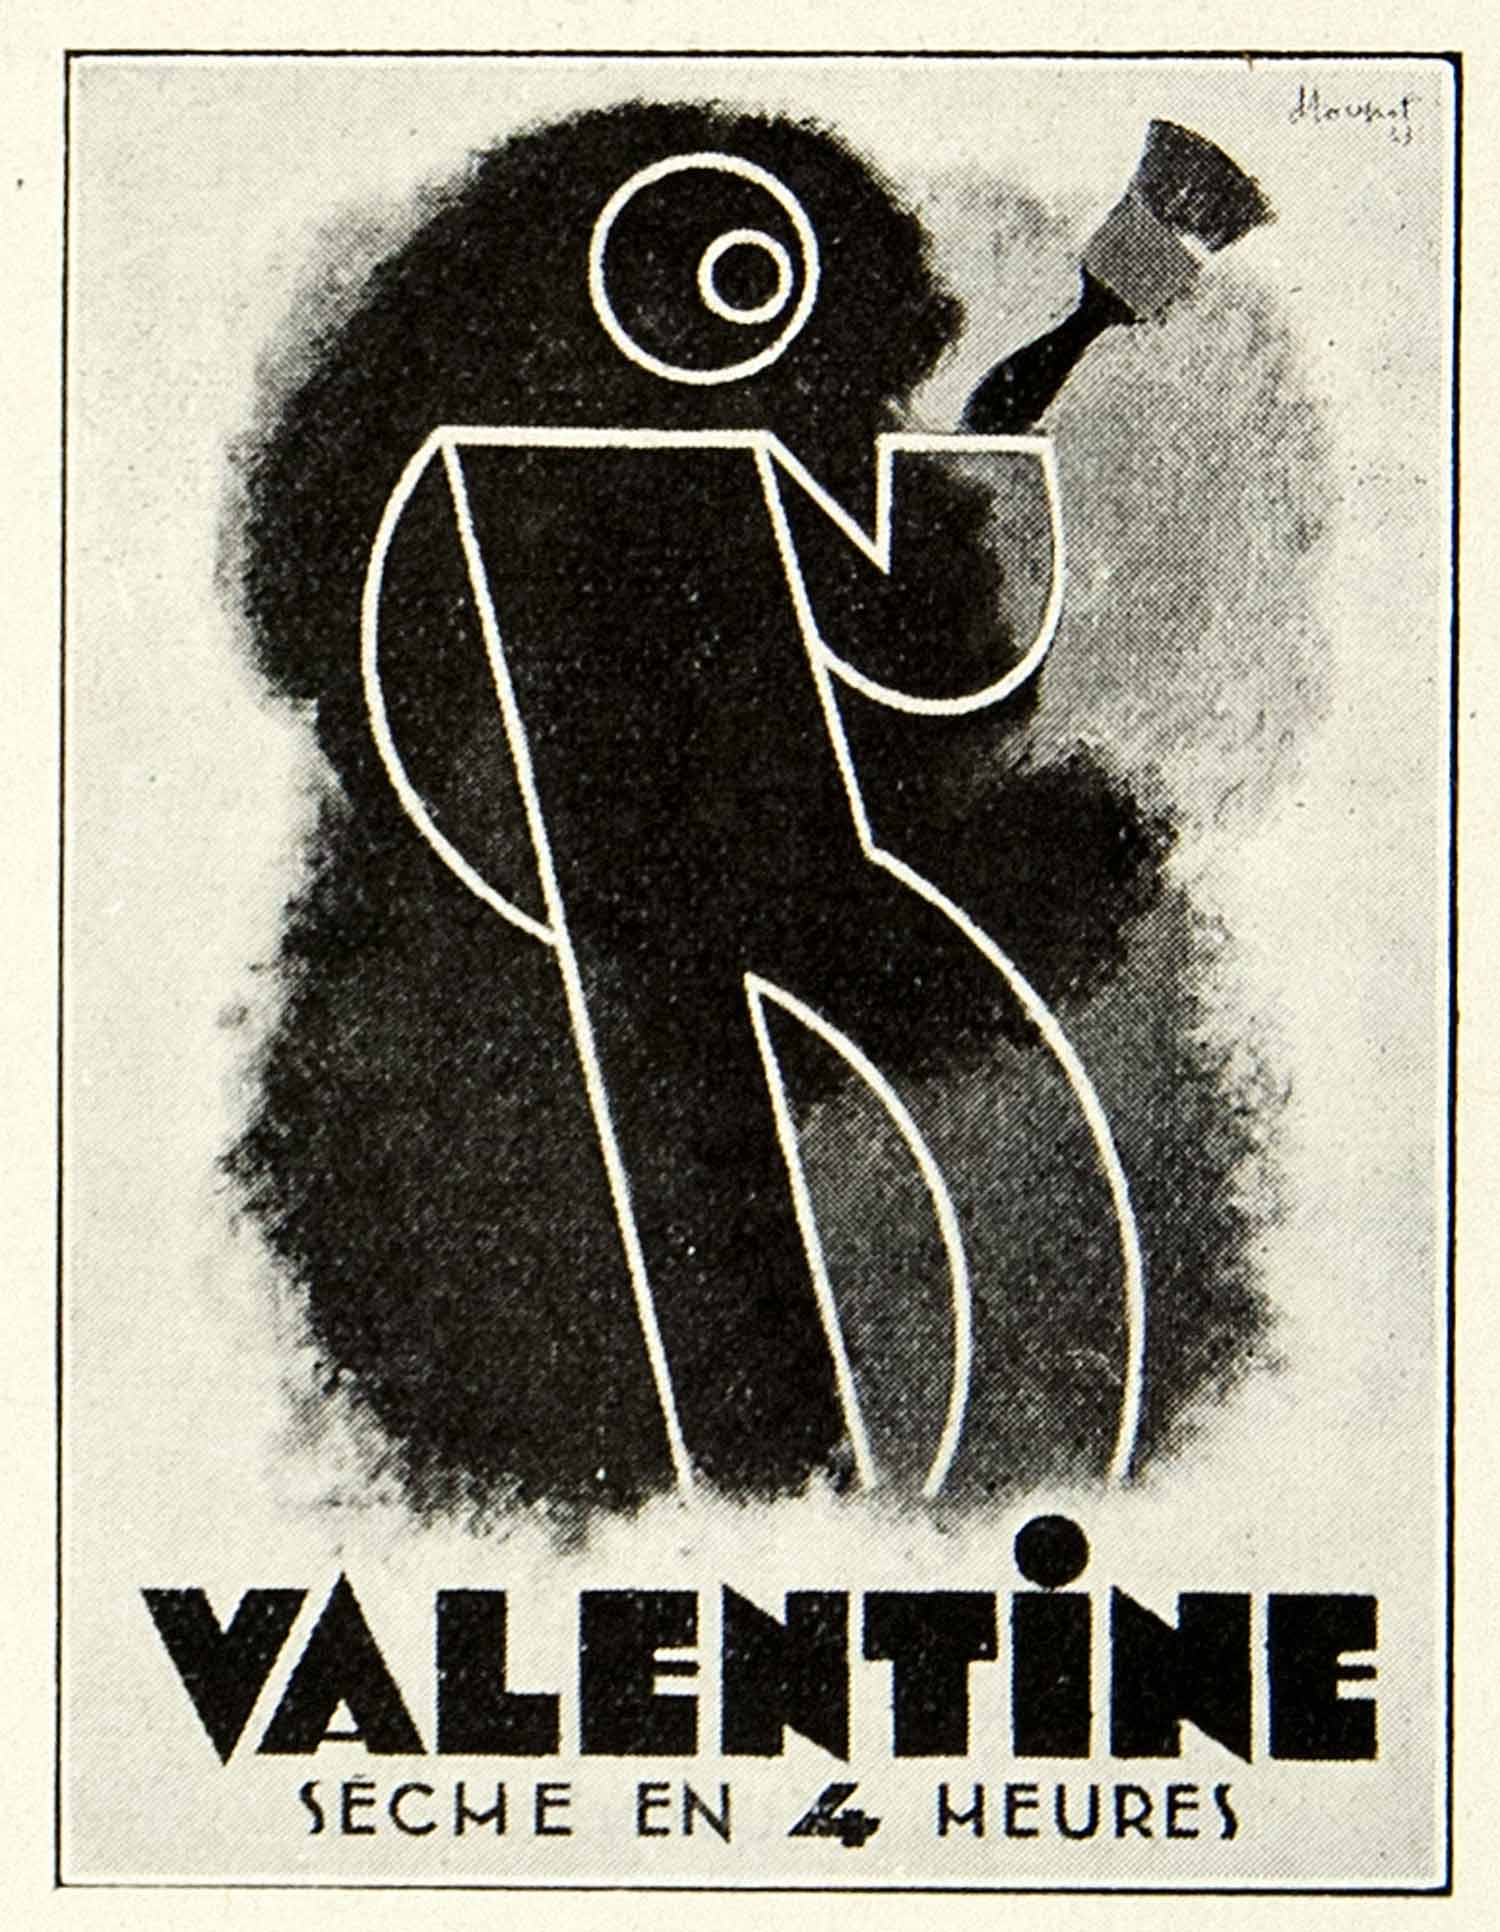 1930 Print Valentine Paint Figure Loupot Historic French Advertising VENA3